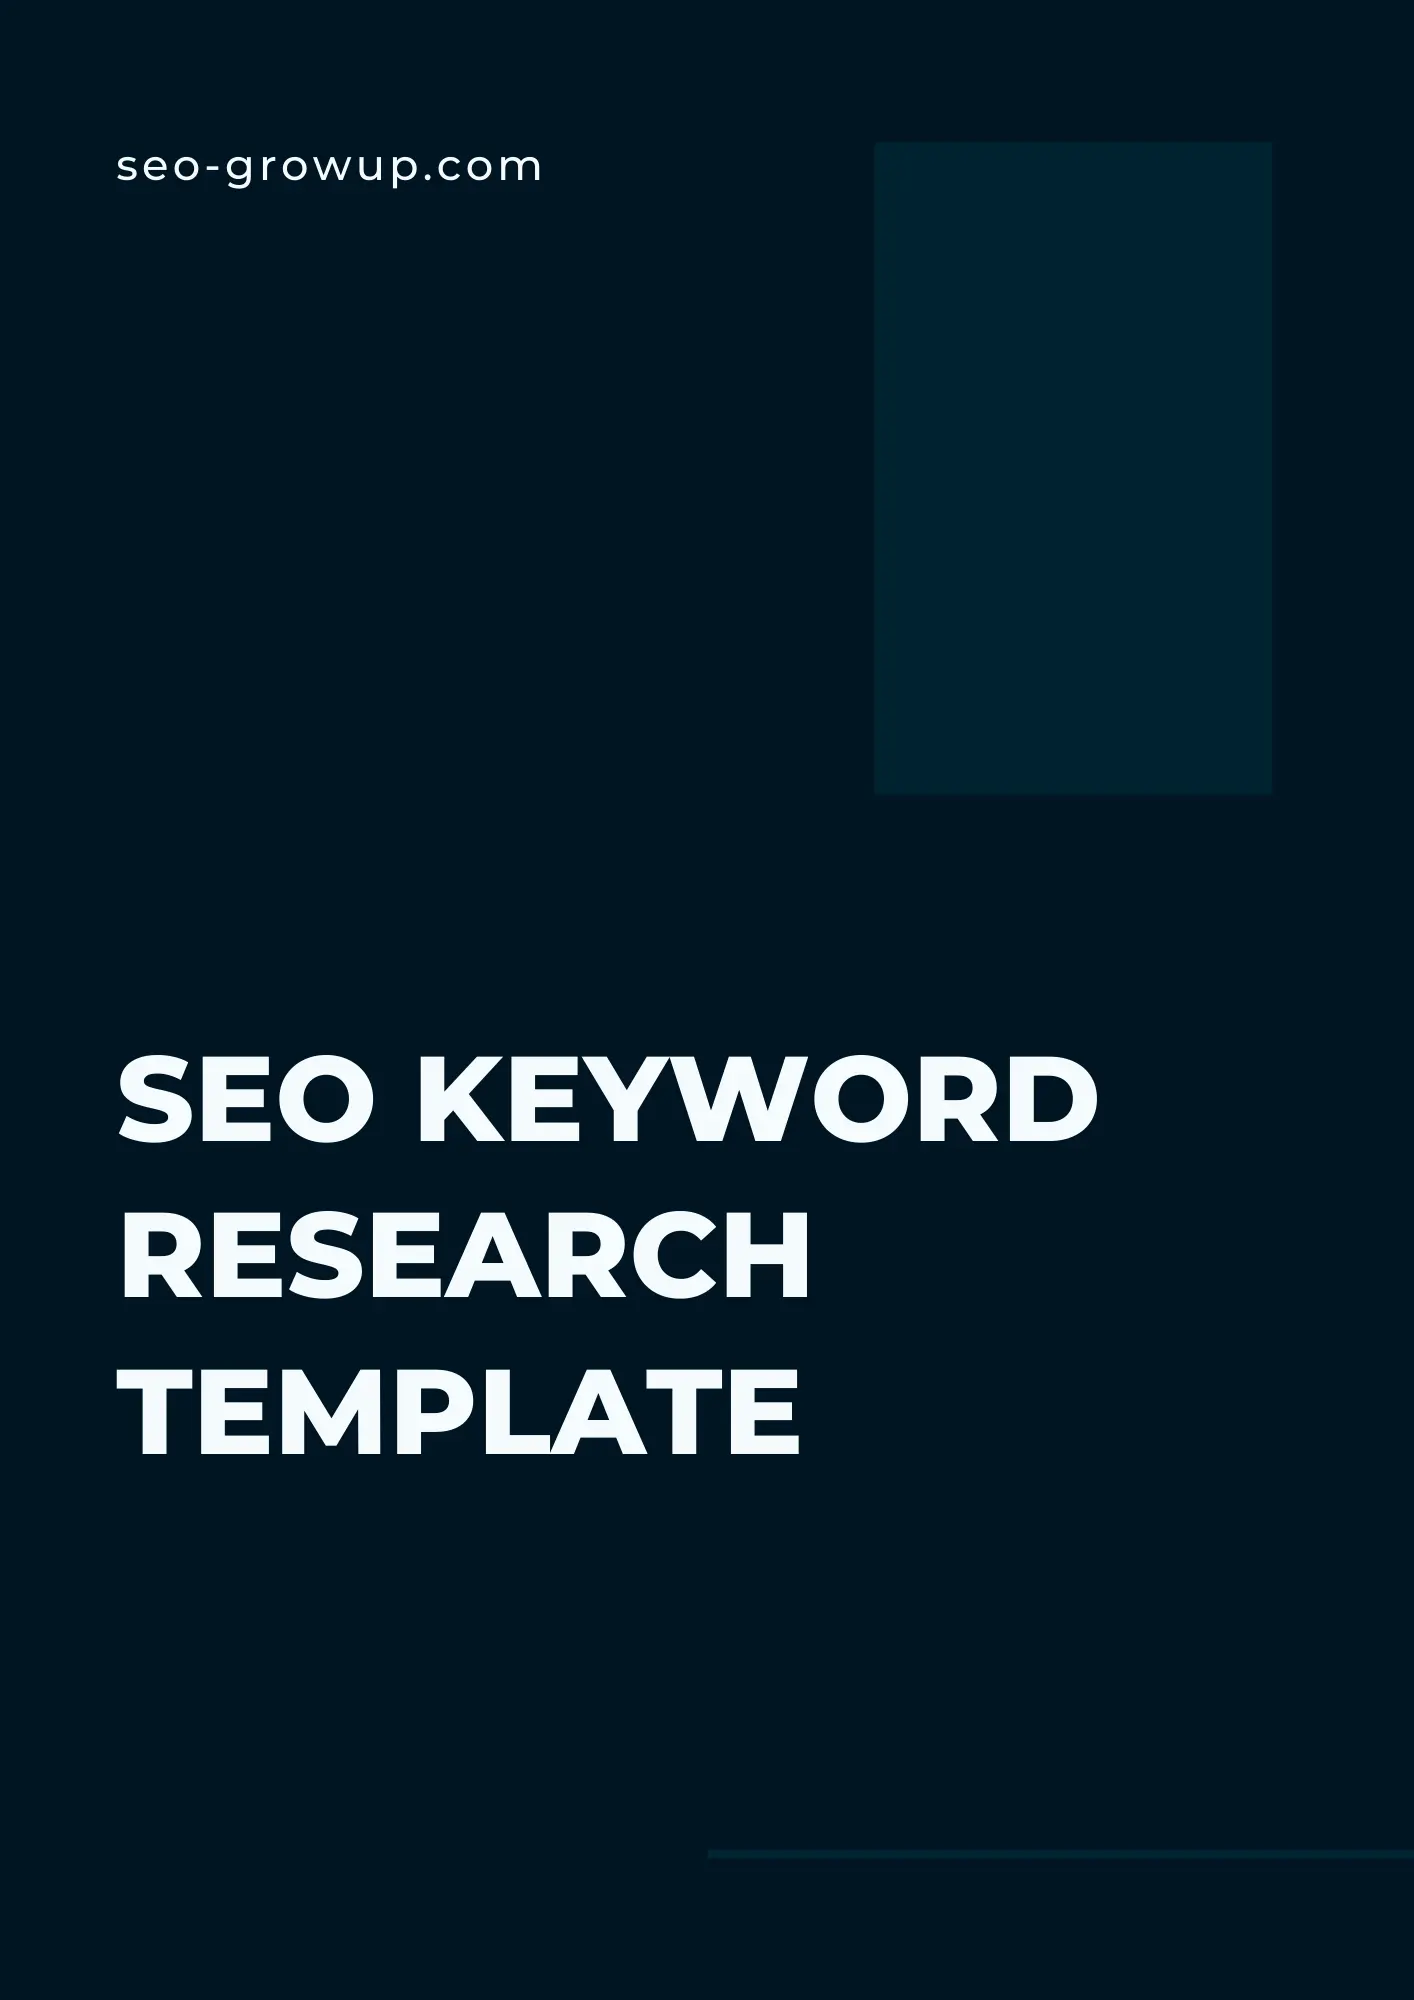 SEO Keyword Research Template